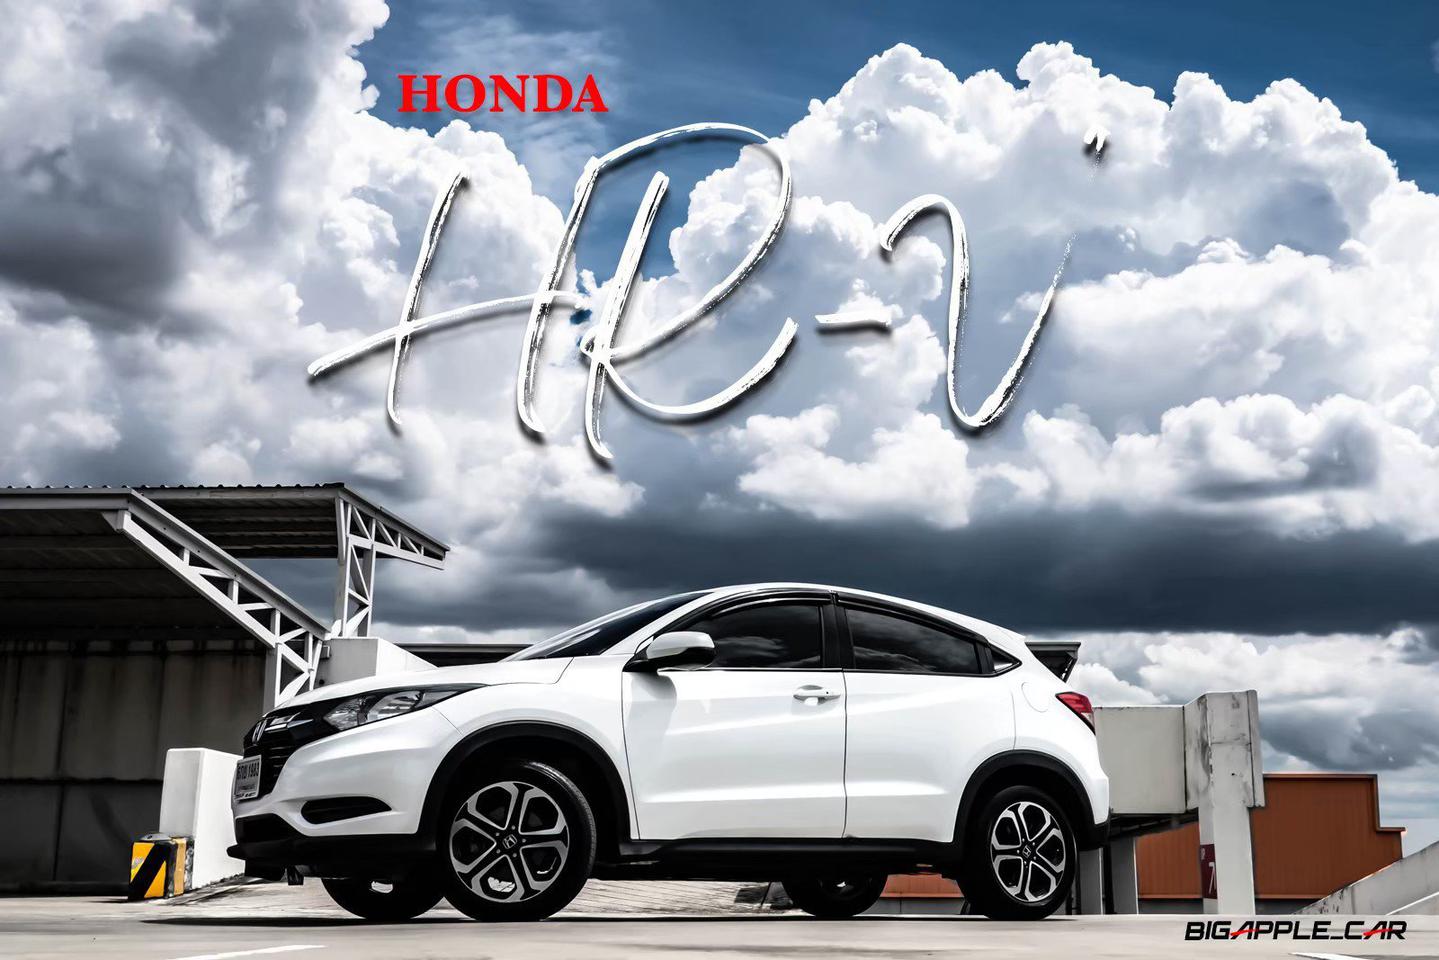 Honda HRV 1.8 S ปี 2017 สีขาว